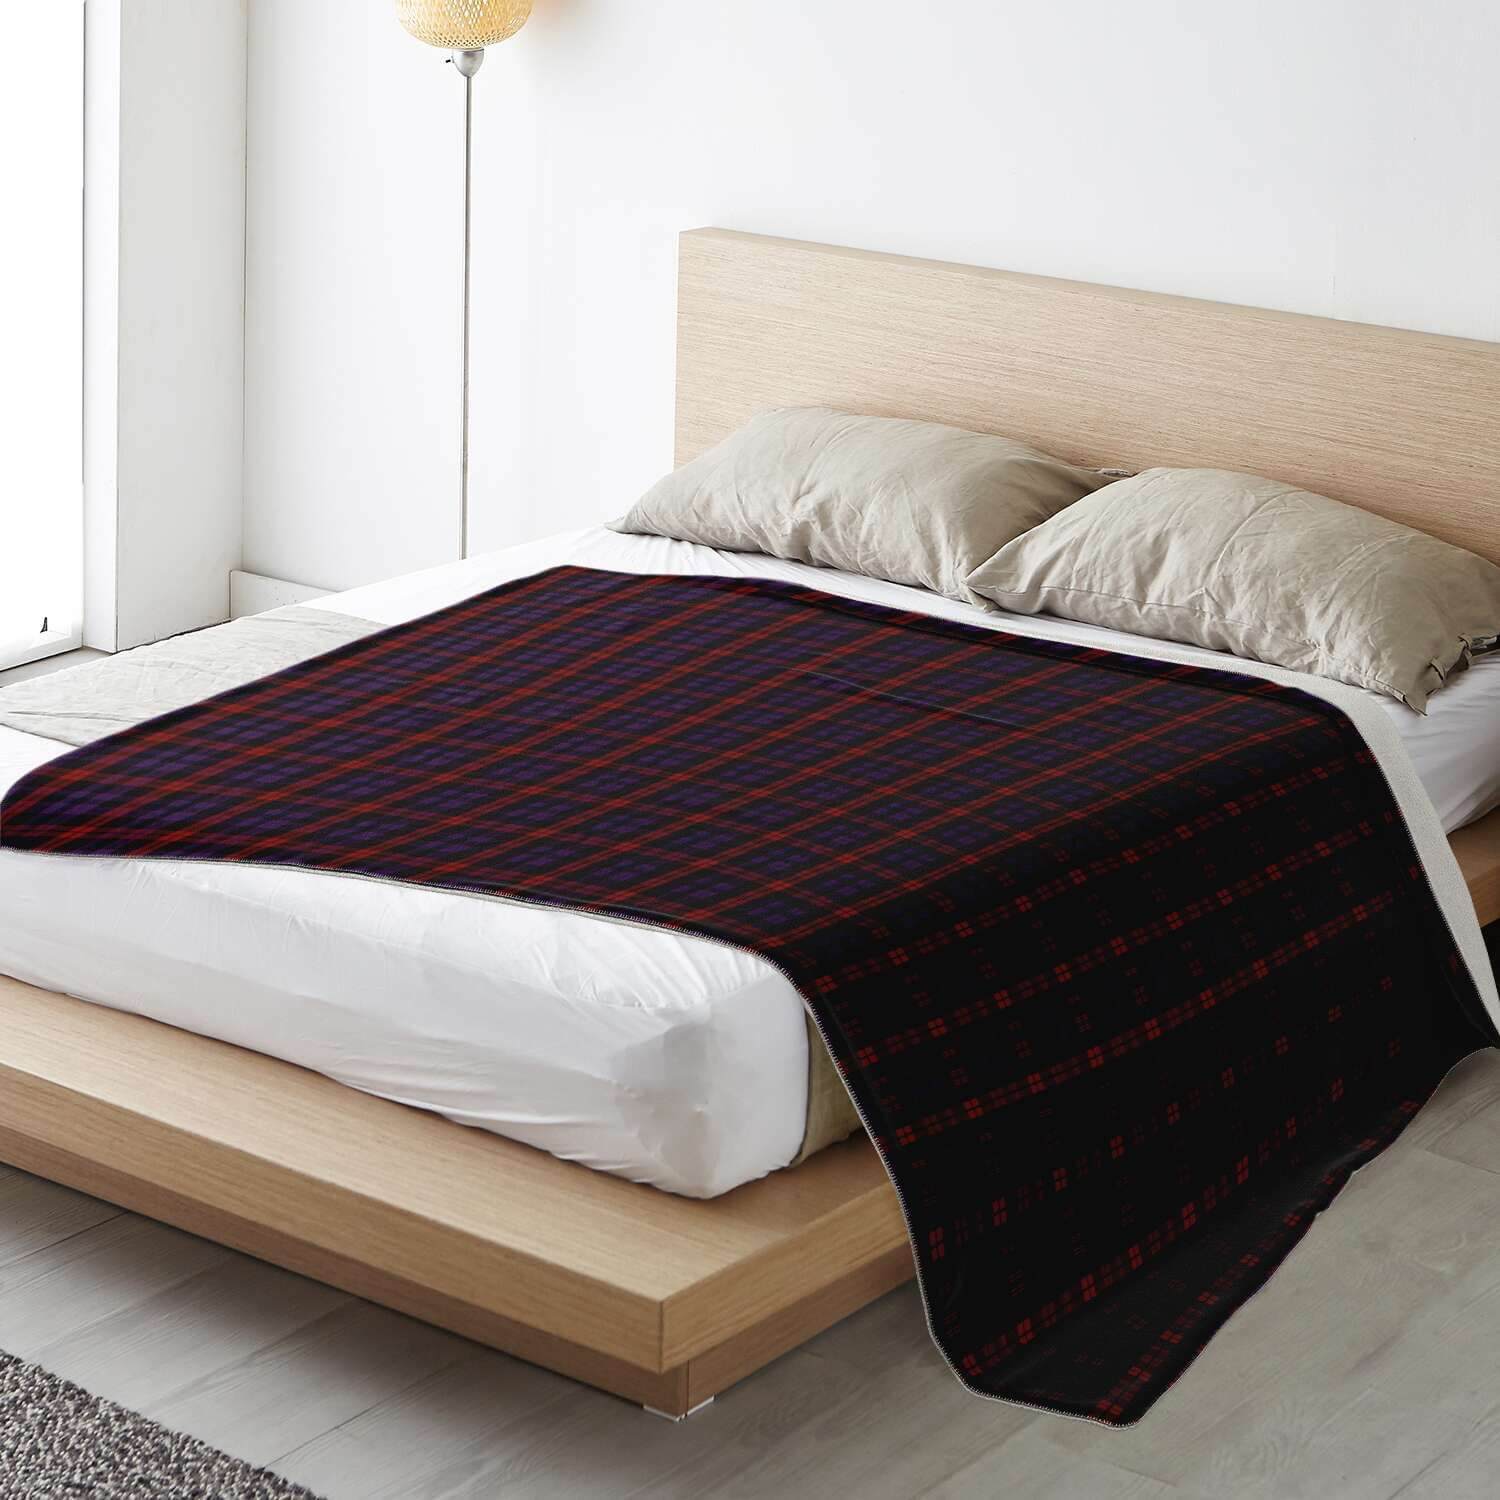 Brown-Tartan-Microfleece-blanket_horizontal_lifestyle-bedextralarge